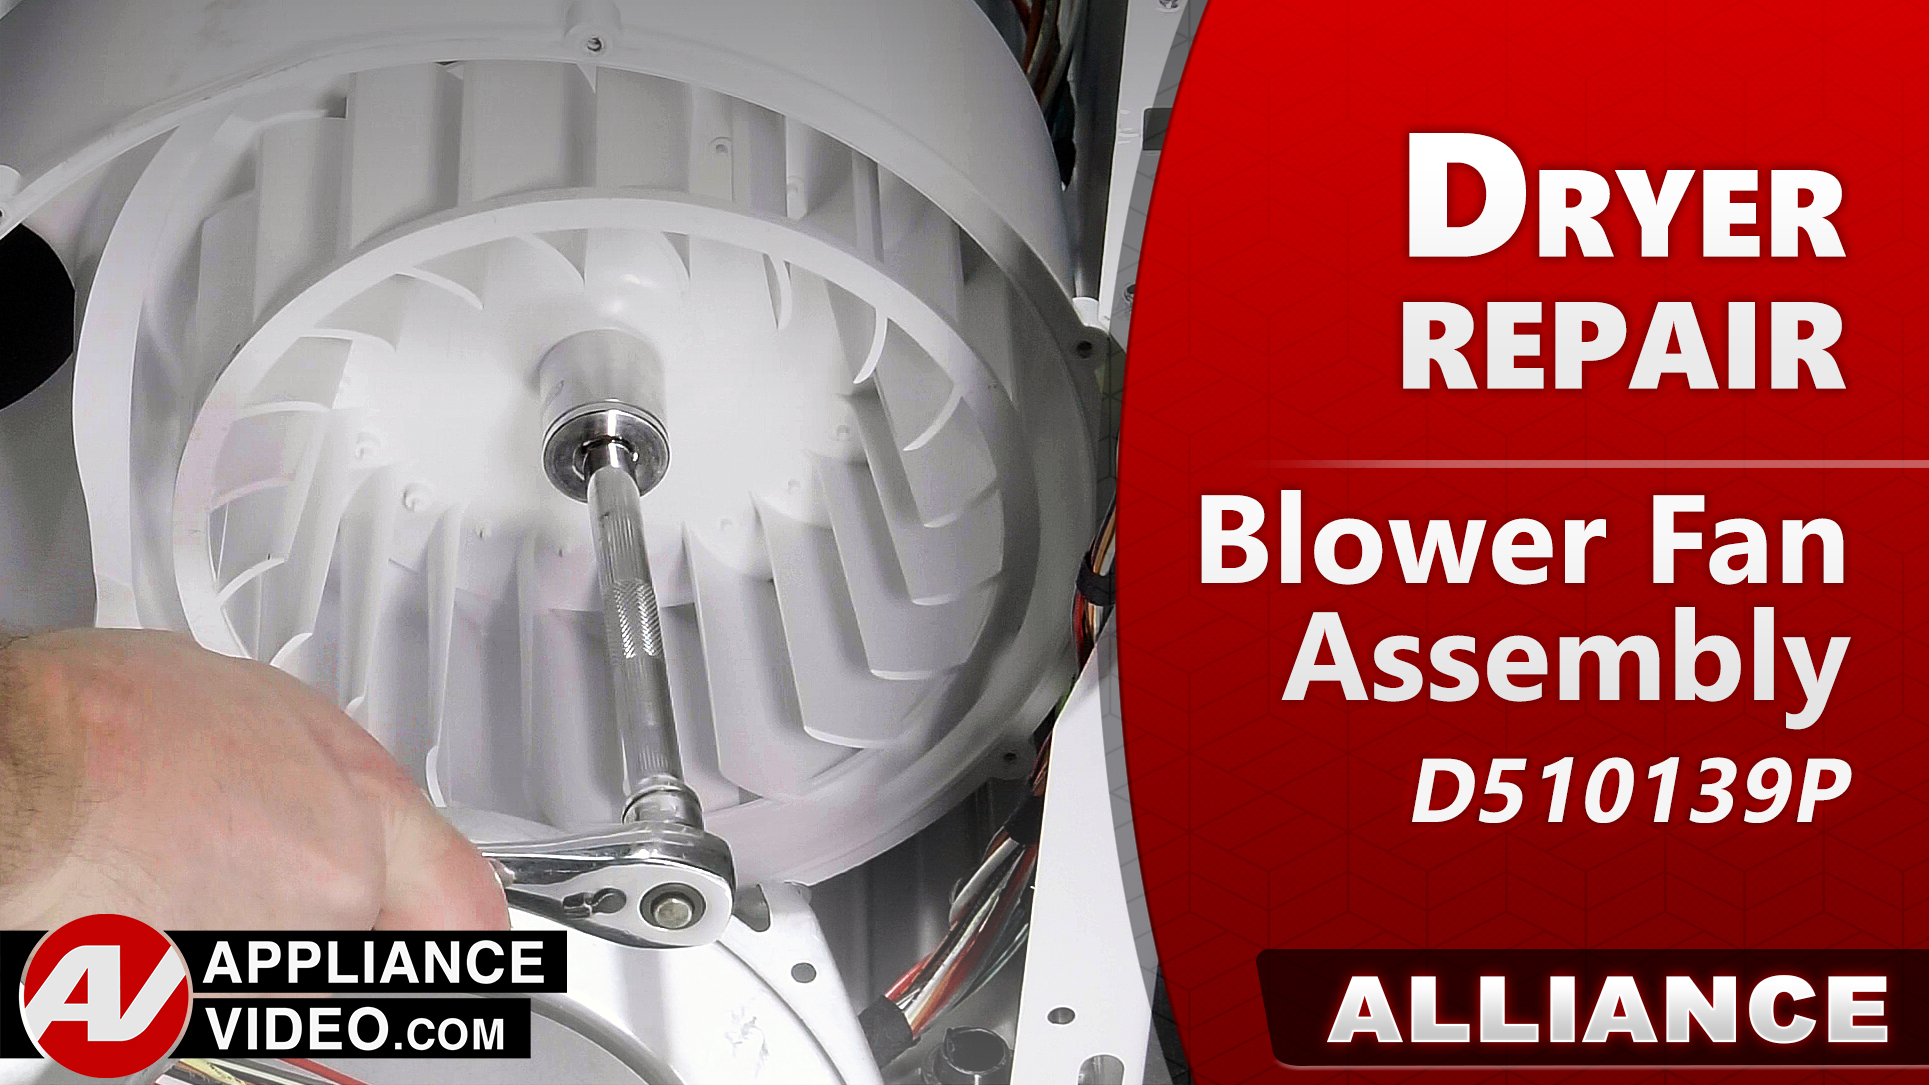 Speed Queen – Alliance Laundry Systems ADG4BRGS115TW01 Dryer – Loud rumbling noise – Blower Fan Assembly